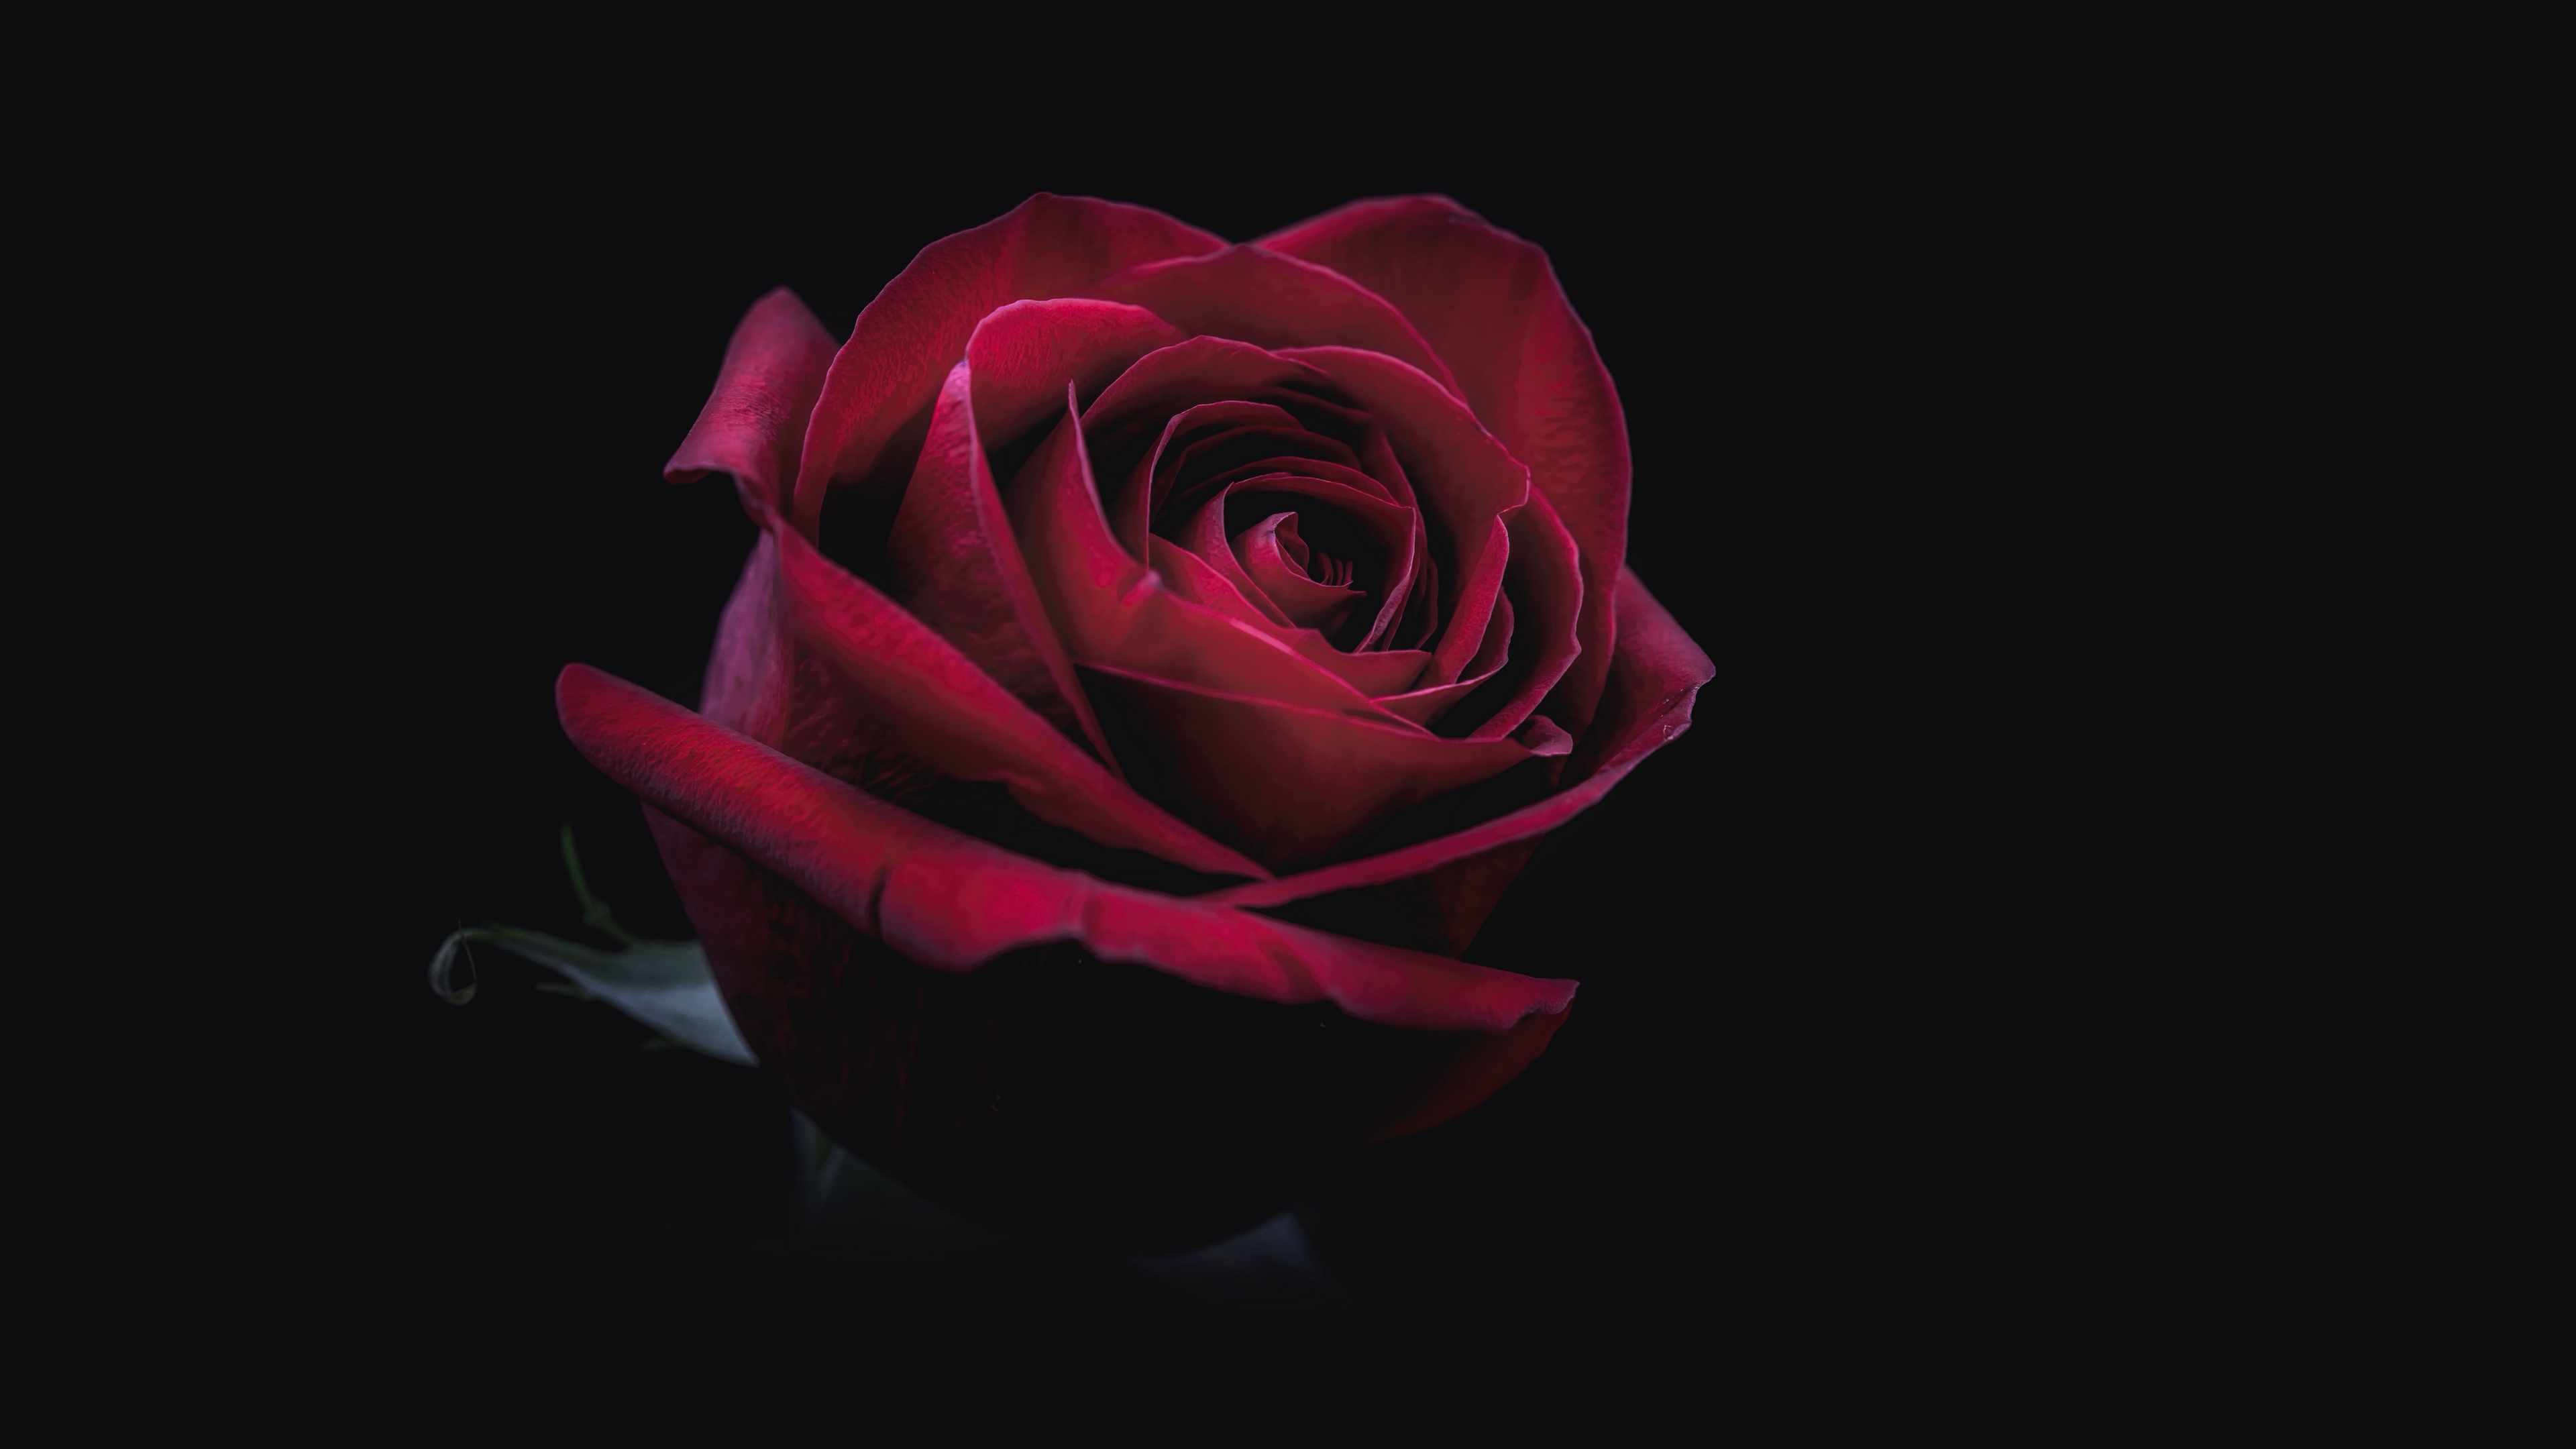 rose bud red dark close up 4k 1540576168 - rose, bud, red, dark, close-up 4k - Rose, red, bud